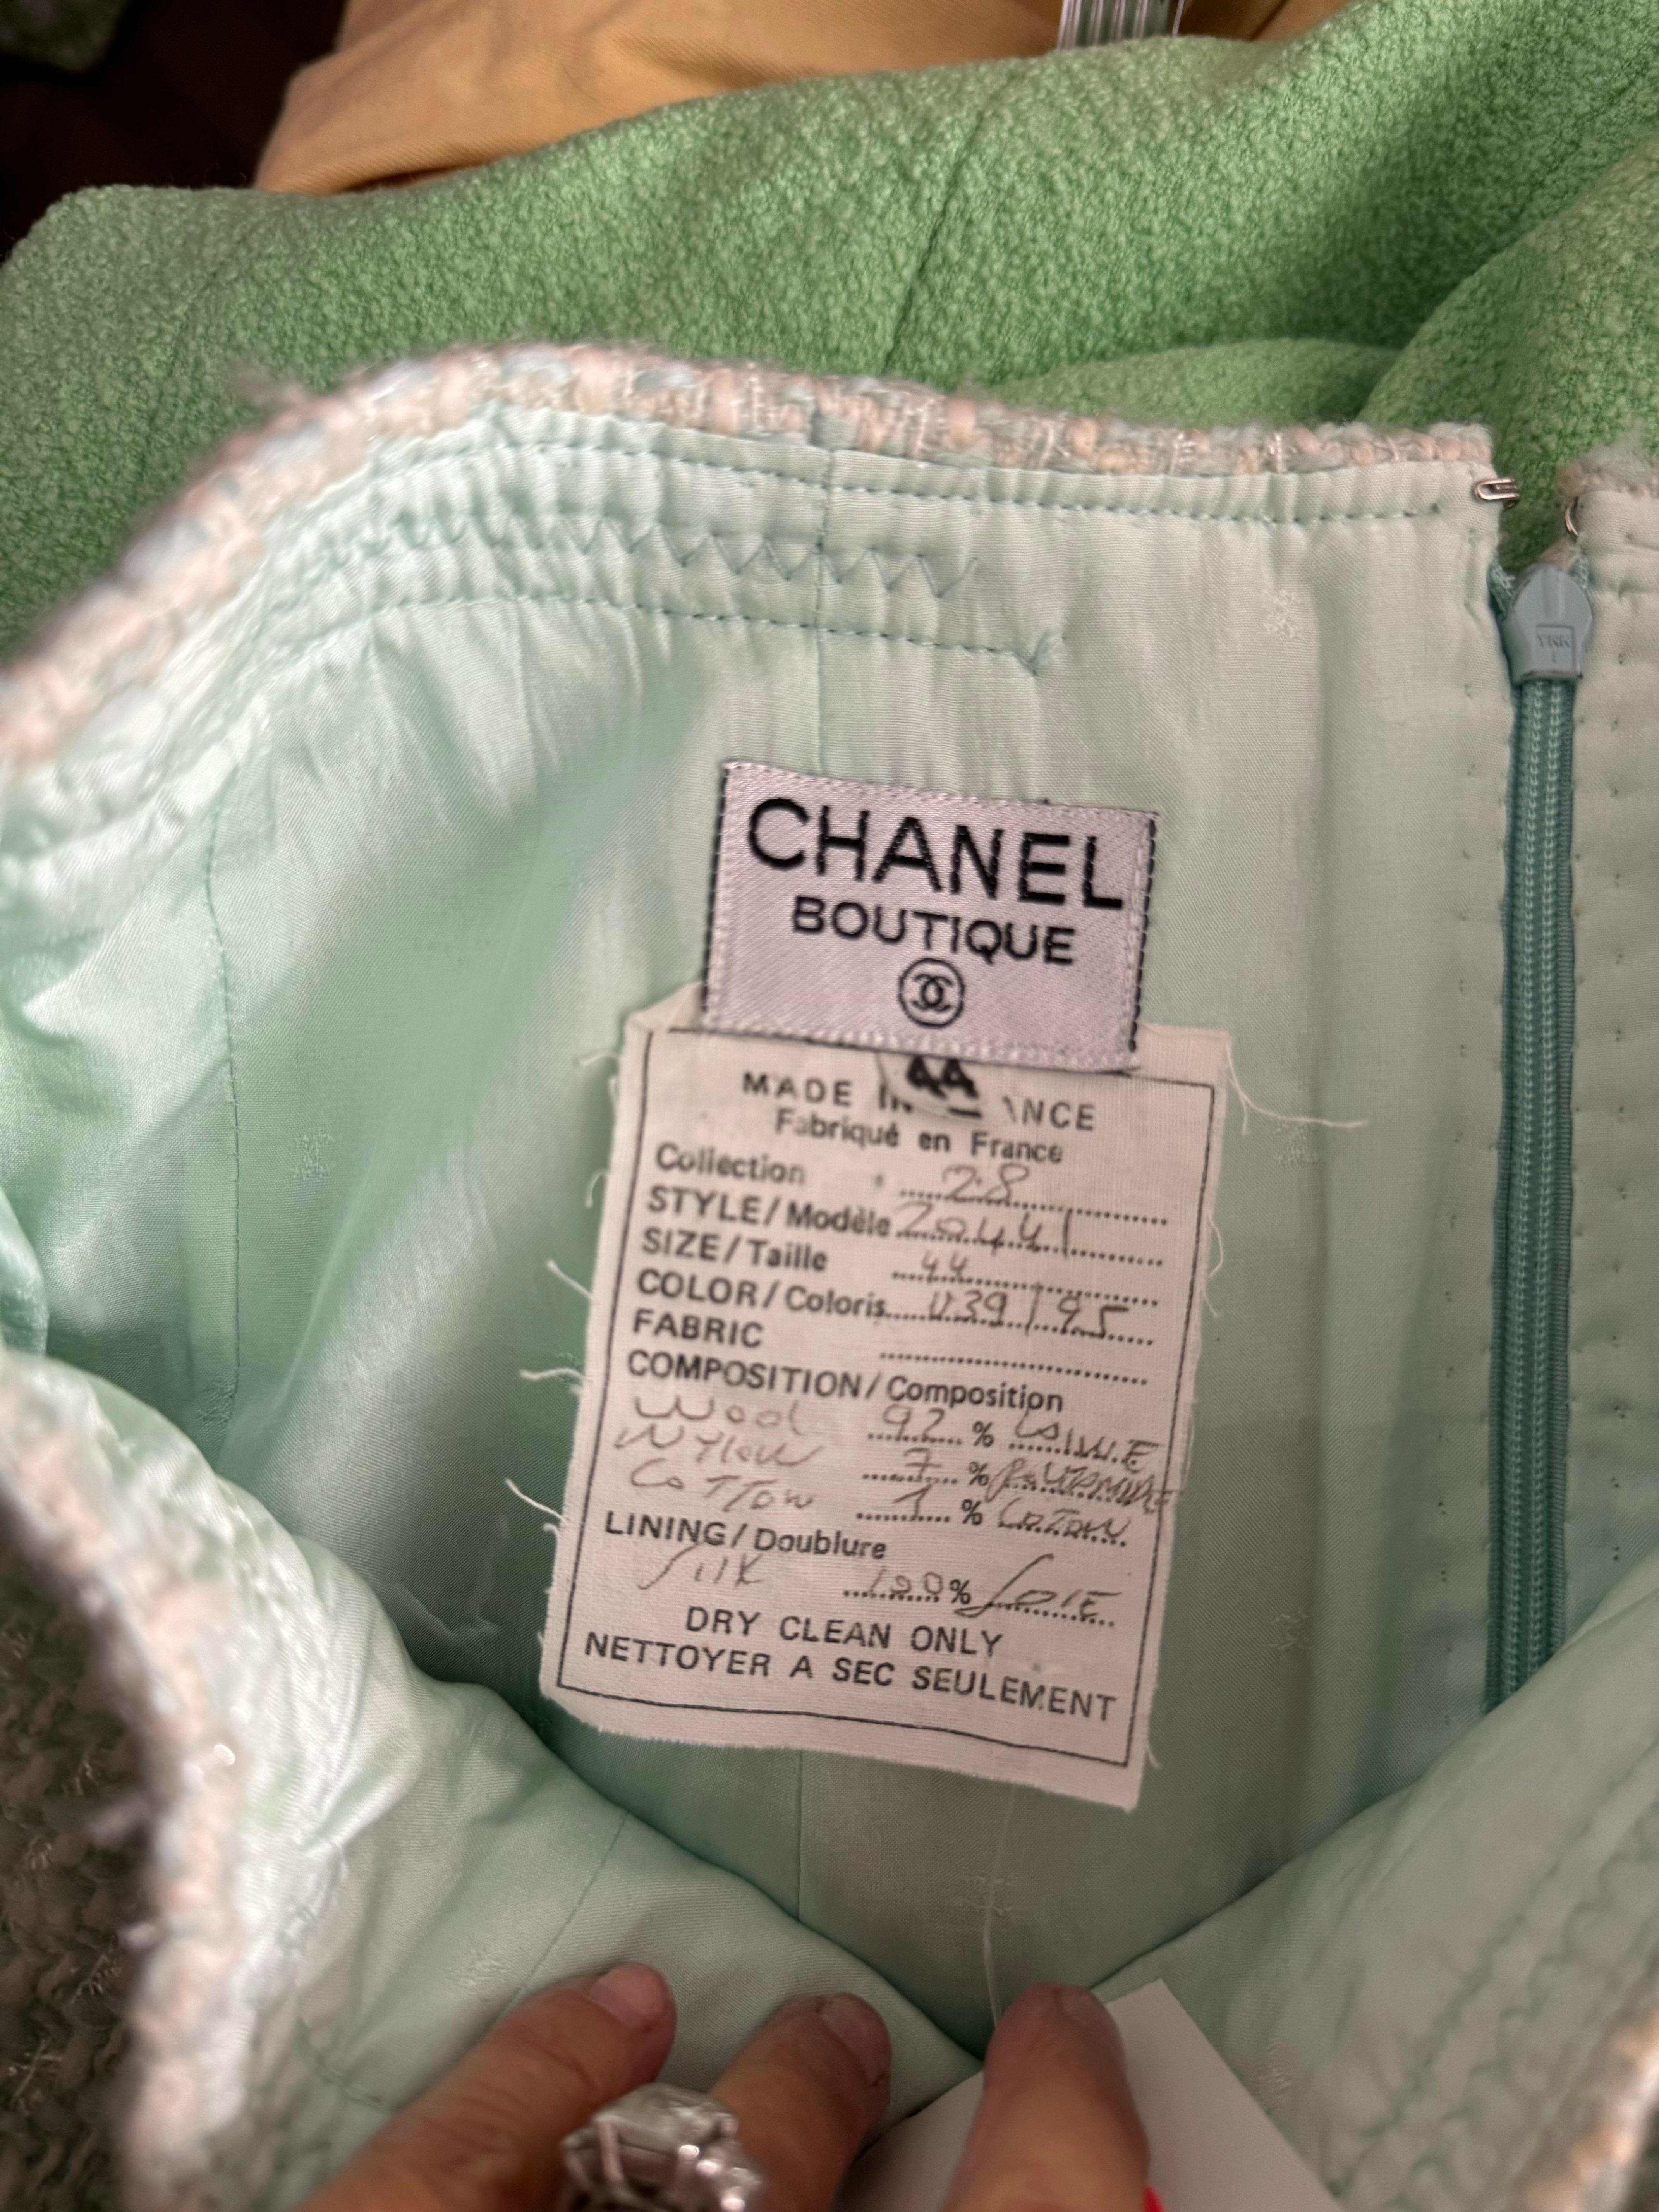 Chanel Boutique Runway printemps 1992 - Veste en tweed ivoire et turq en vente 9